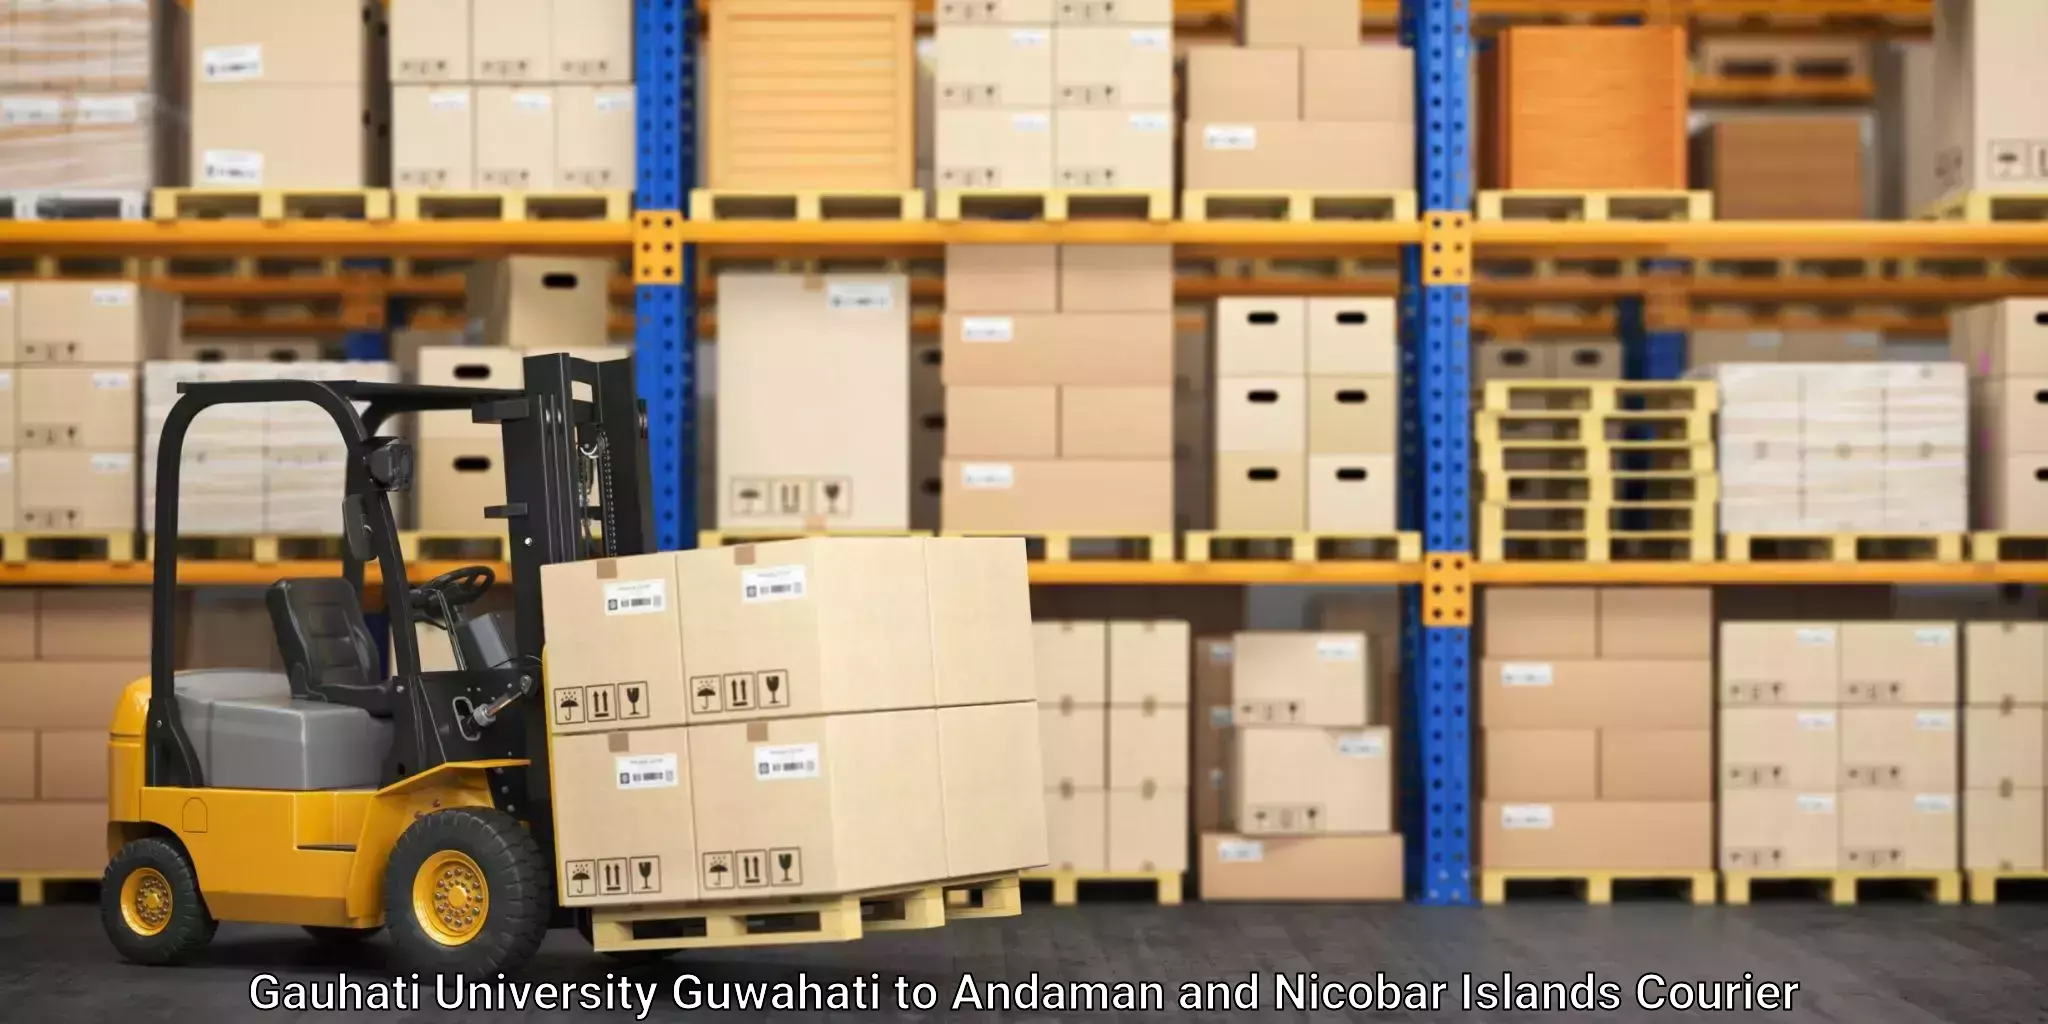 Long distance courier Gauhati University Guwahati to Andaman and Nicobar Islands